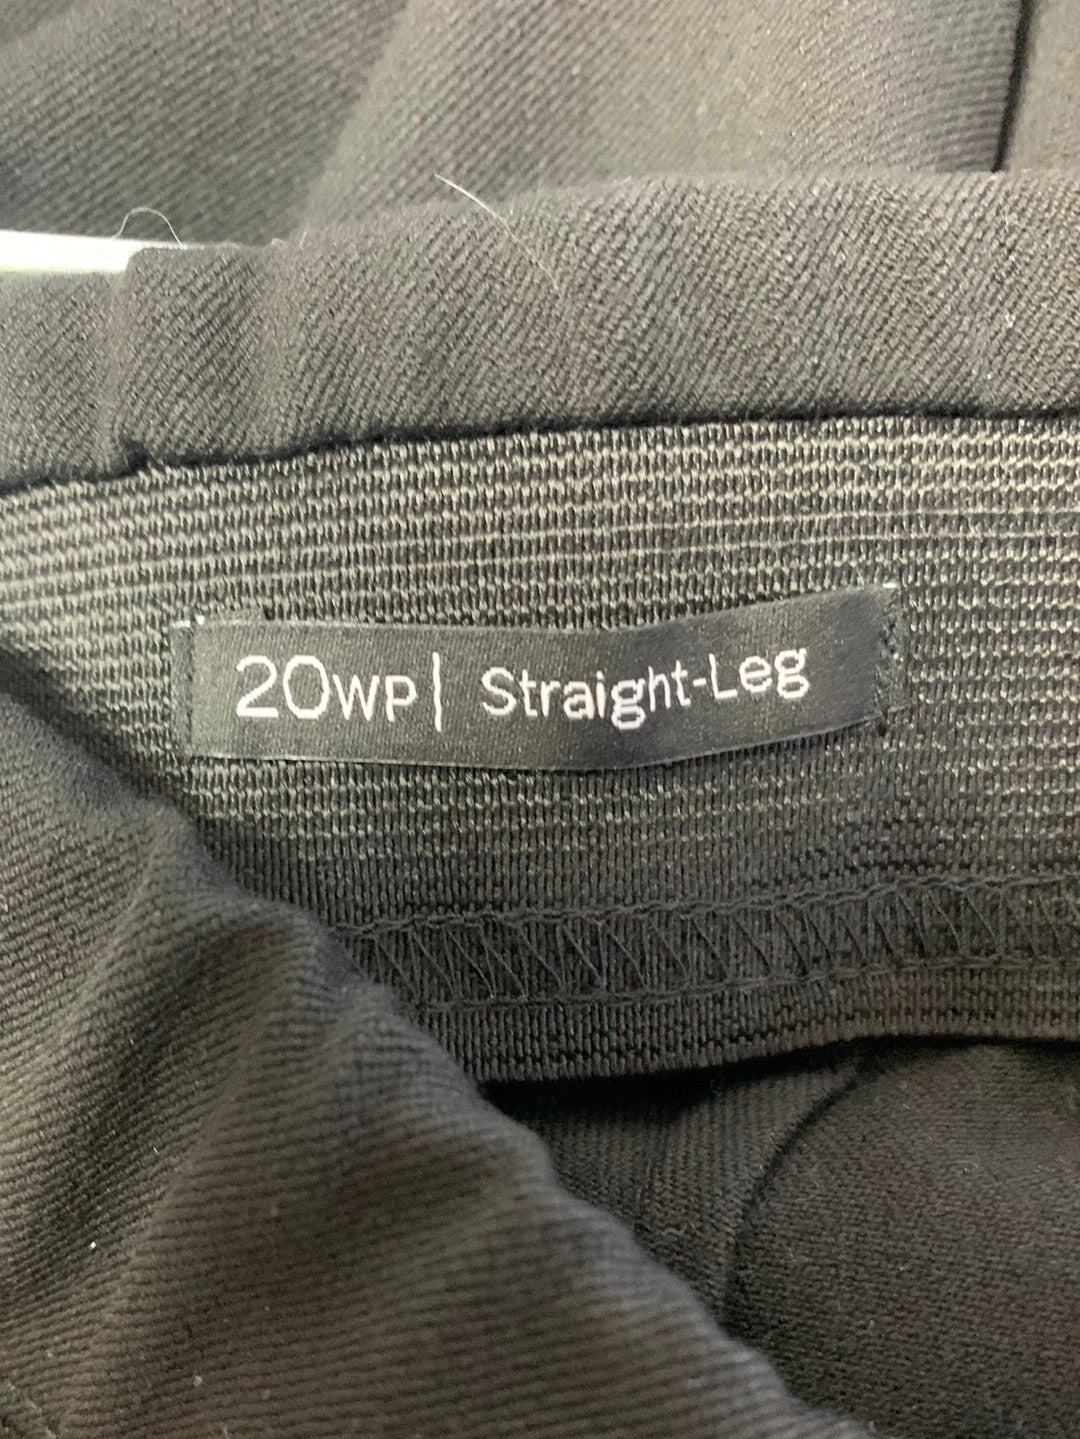 NWT - TALBOTS black Pull On Straight Leg Full Length Pants - 20WP